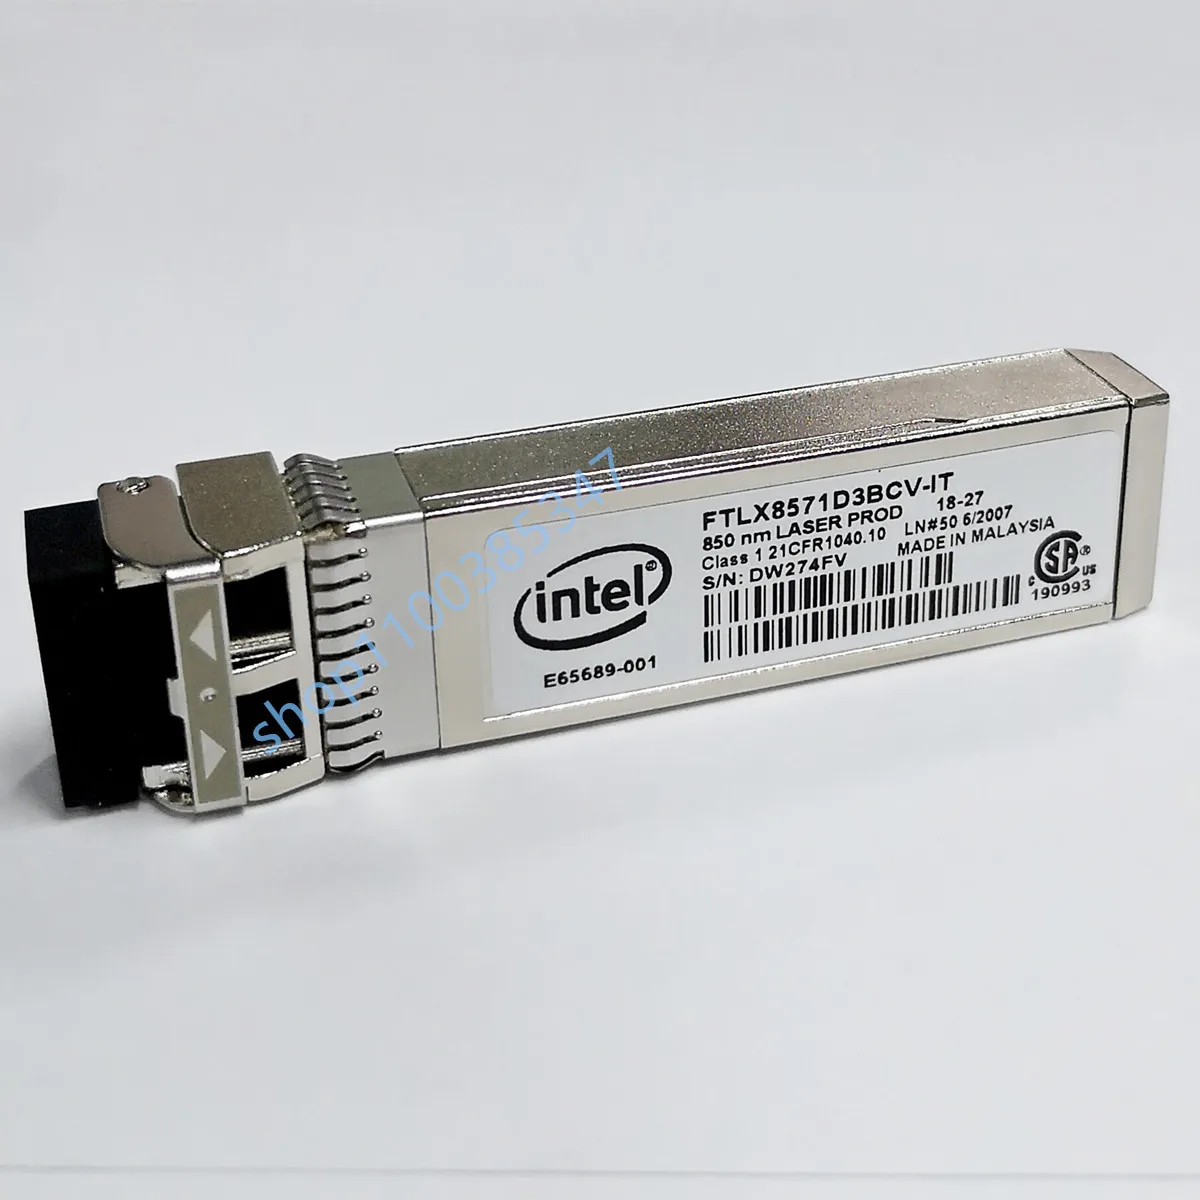 intel 10g fiber adapter/FTLX8571D3BCV-IT/10G SFP/E65689-001 0Y3KJN for X710 X520 switch 10g sfp/intel 10g fibre channel module